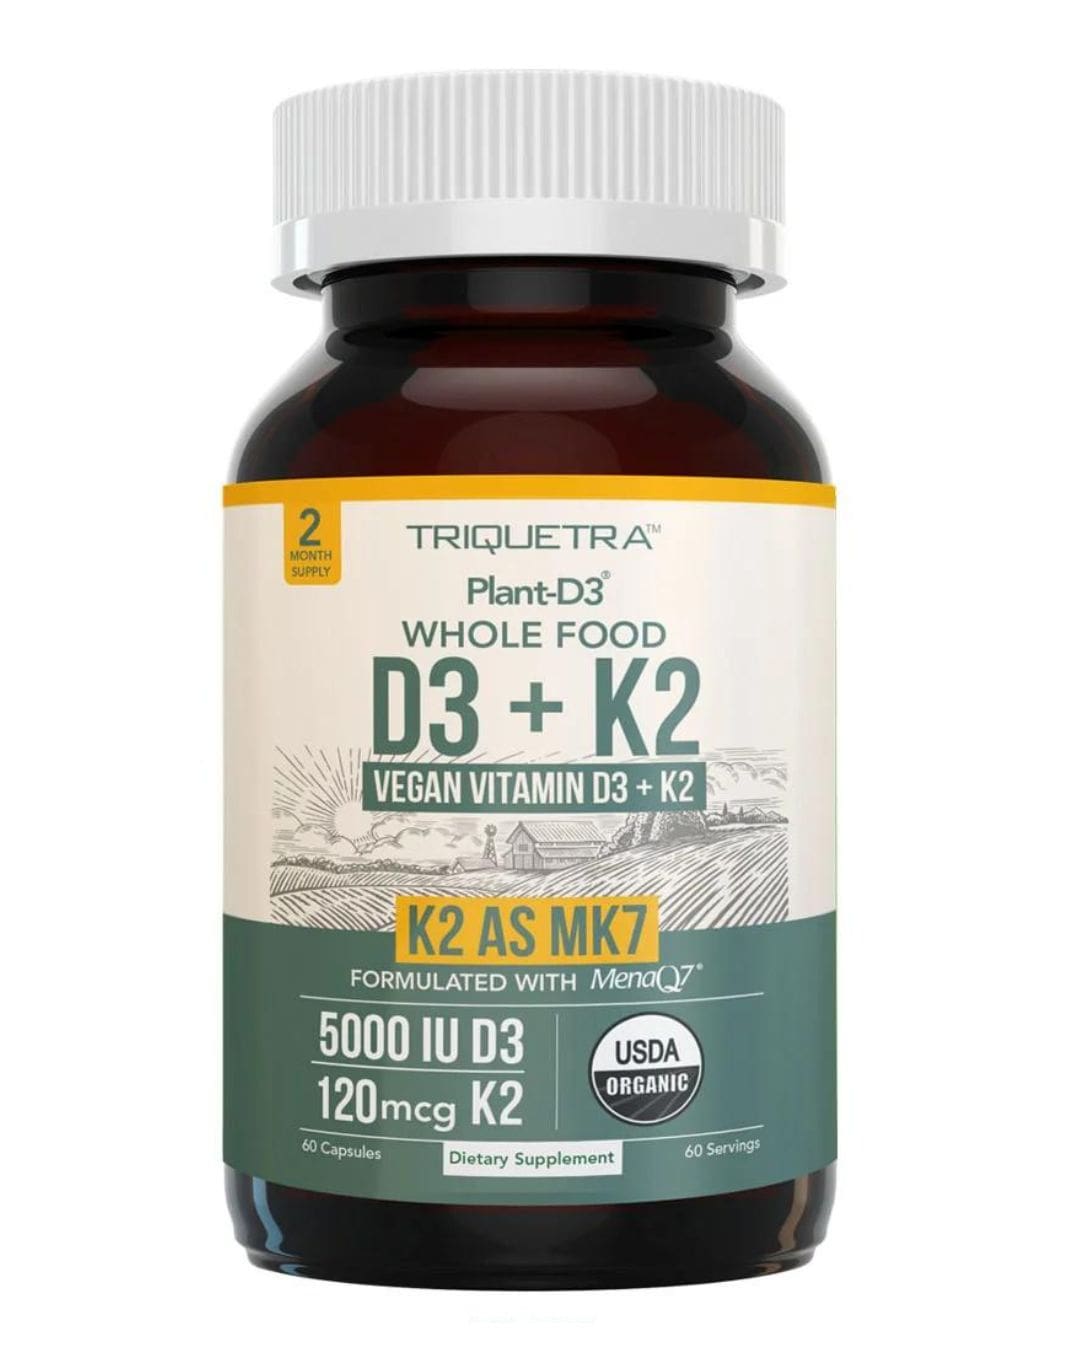 5 Best Vitamin D3 and K2 Supplements Australia for Women.